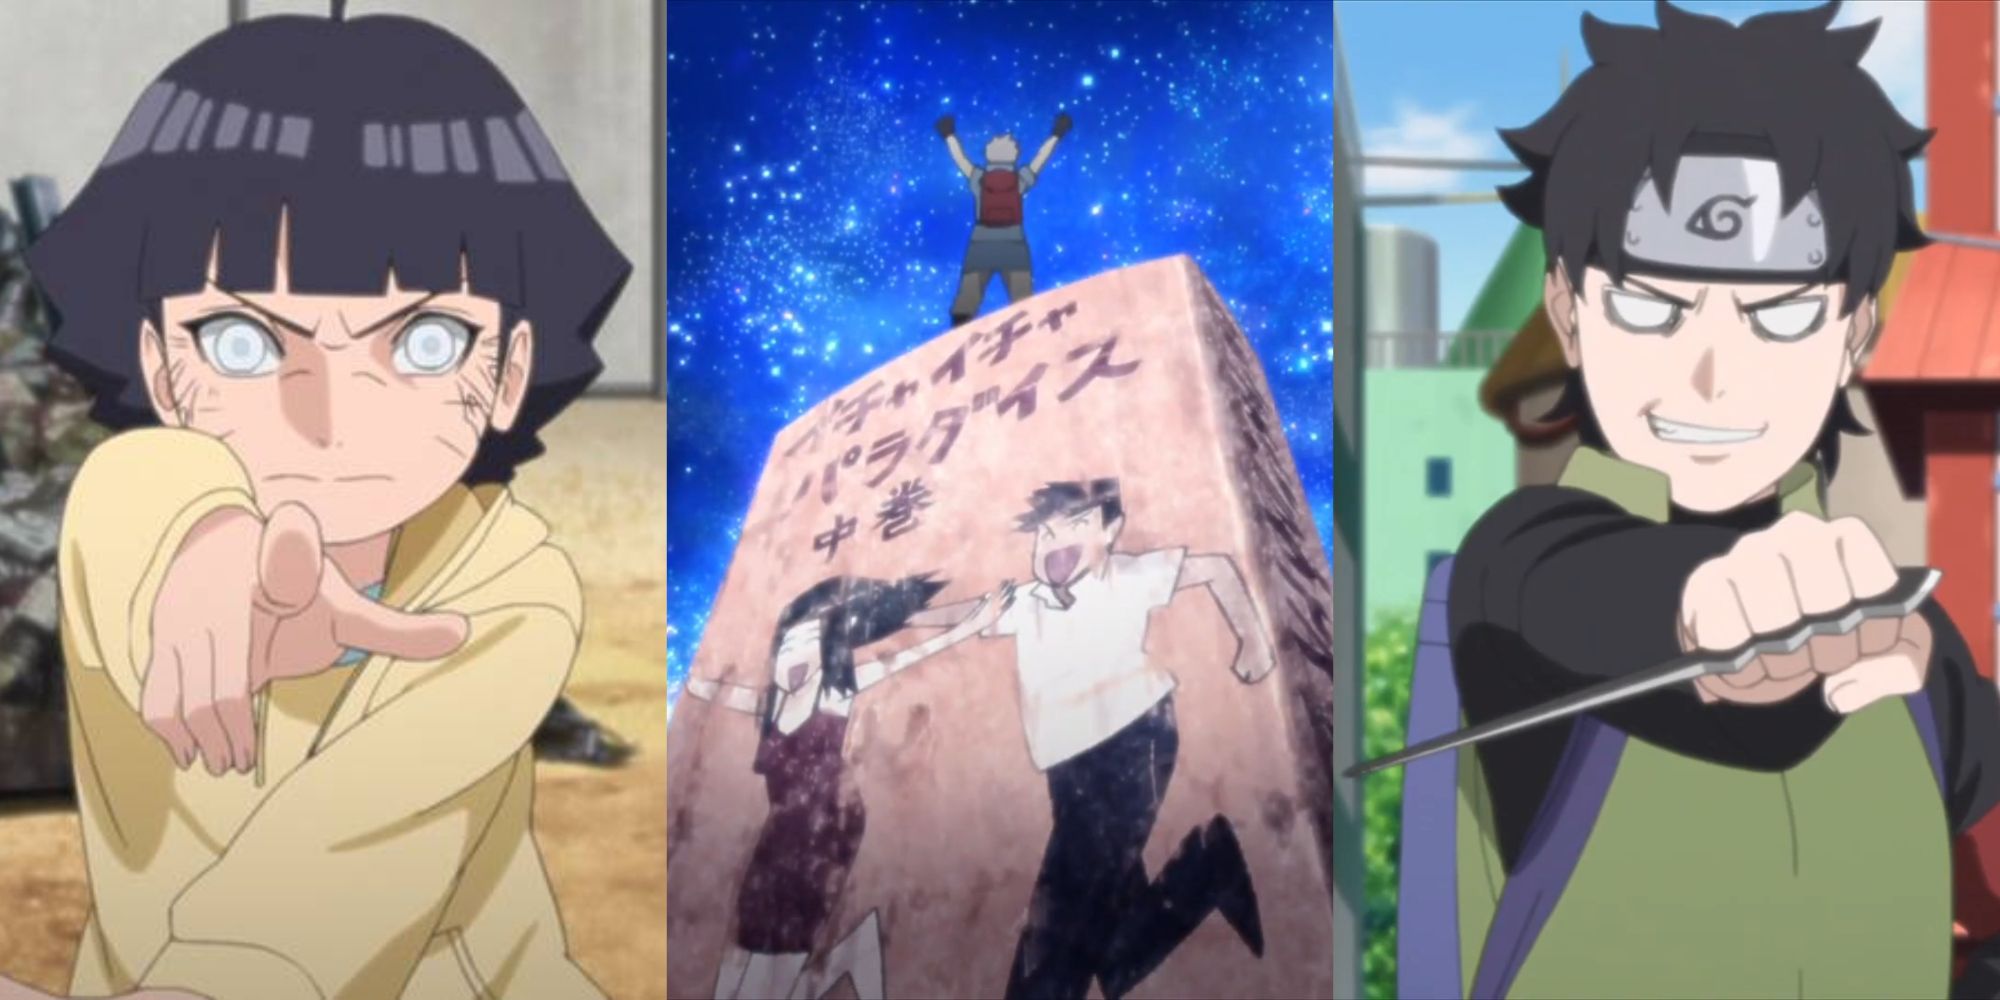 Boruto: Naruto Next Generations Filler List – All Filler Episodes